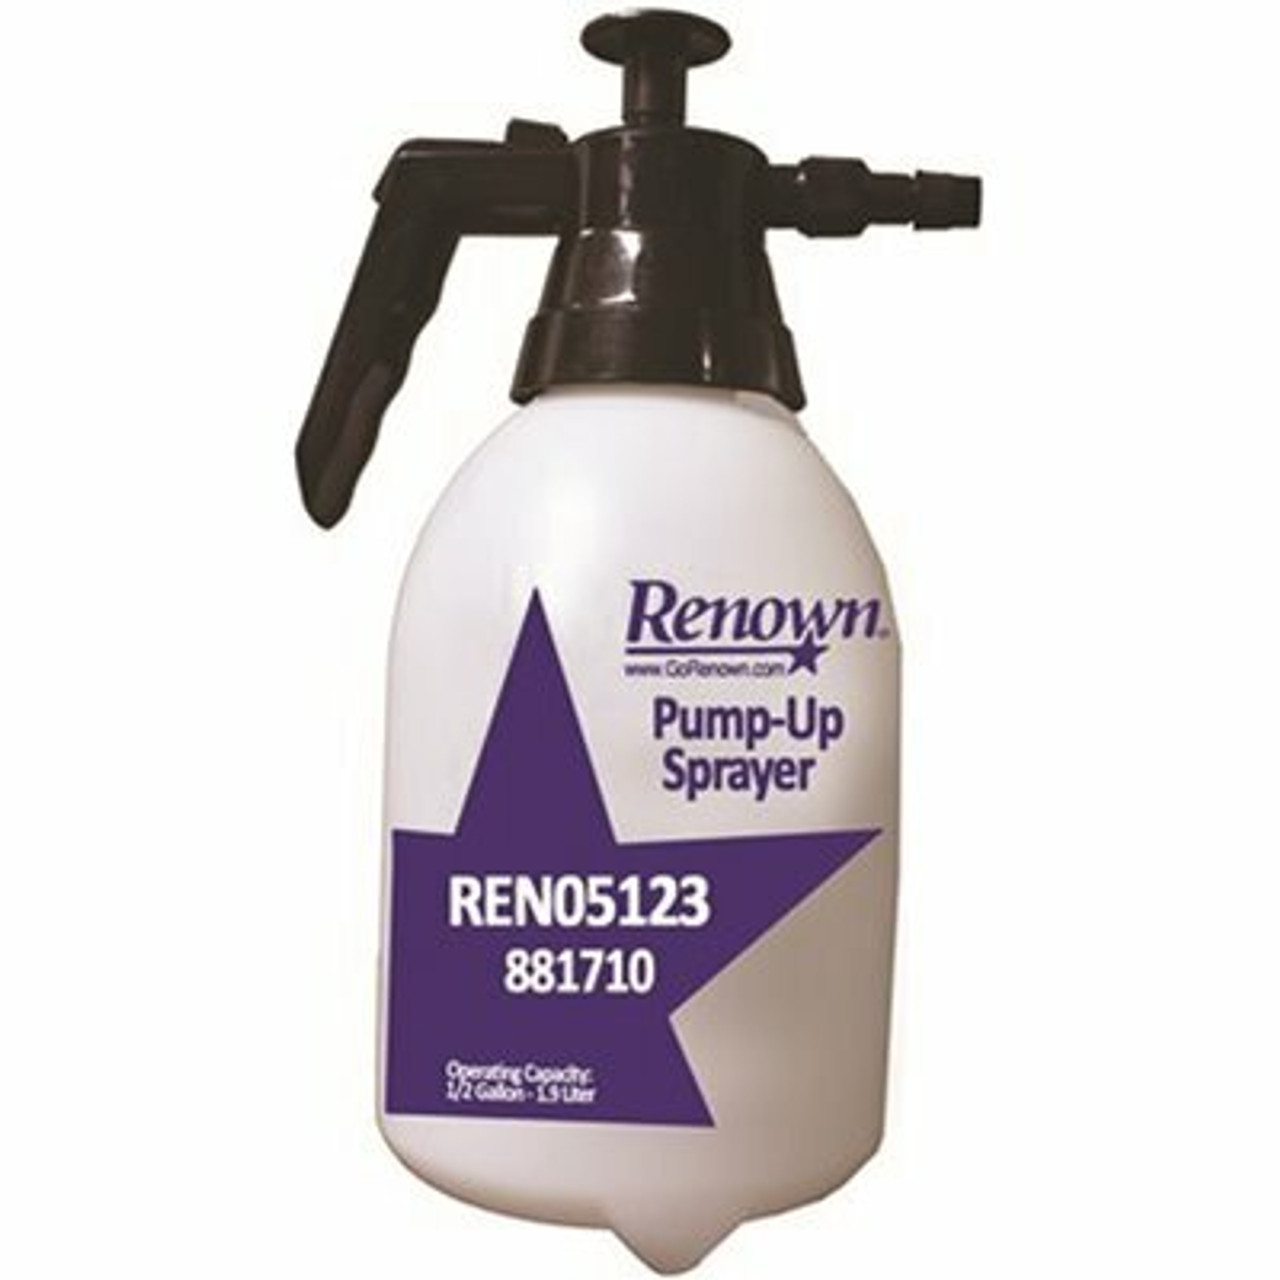 Renown 64 Oz. Pump Up Sprayer